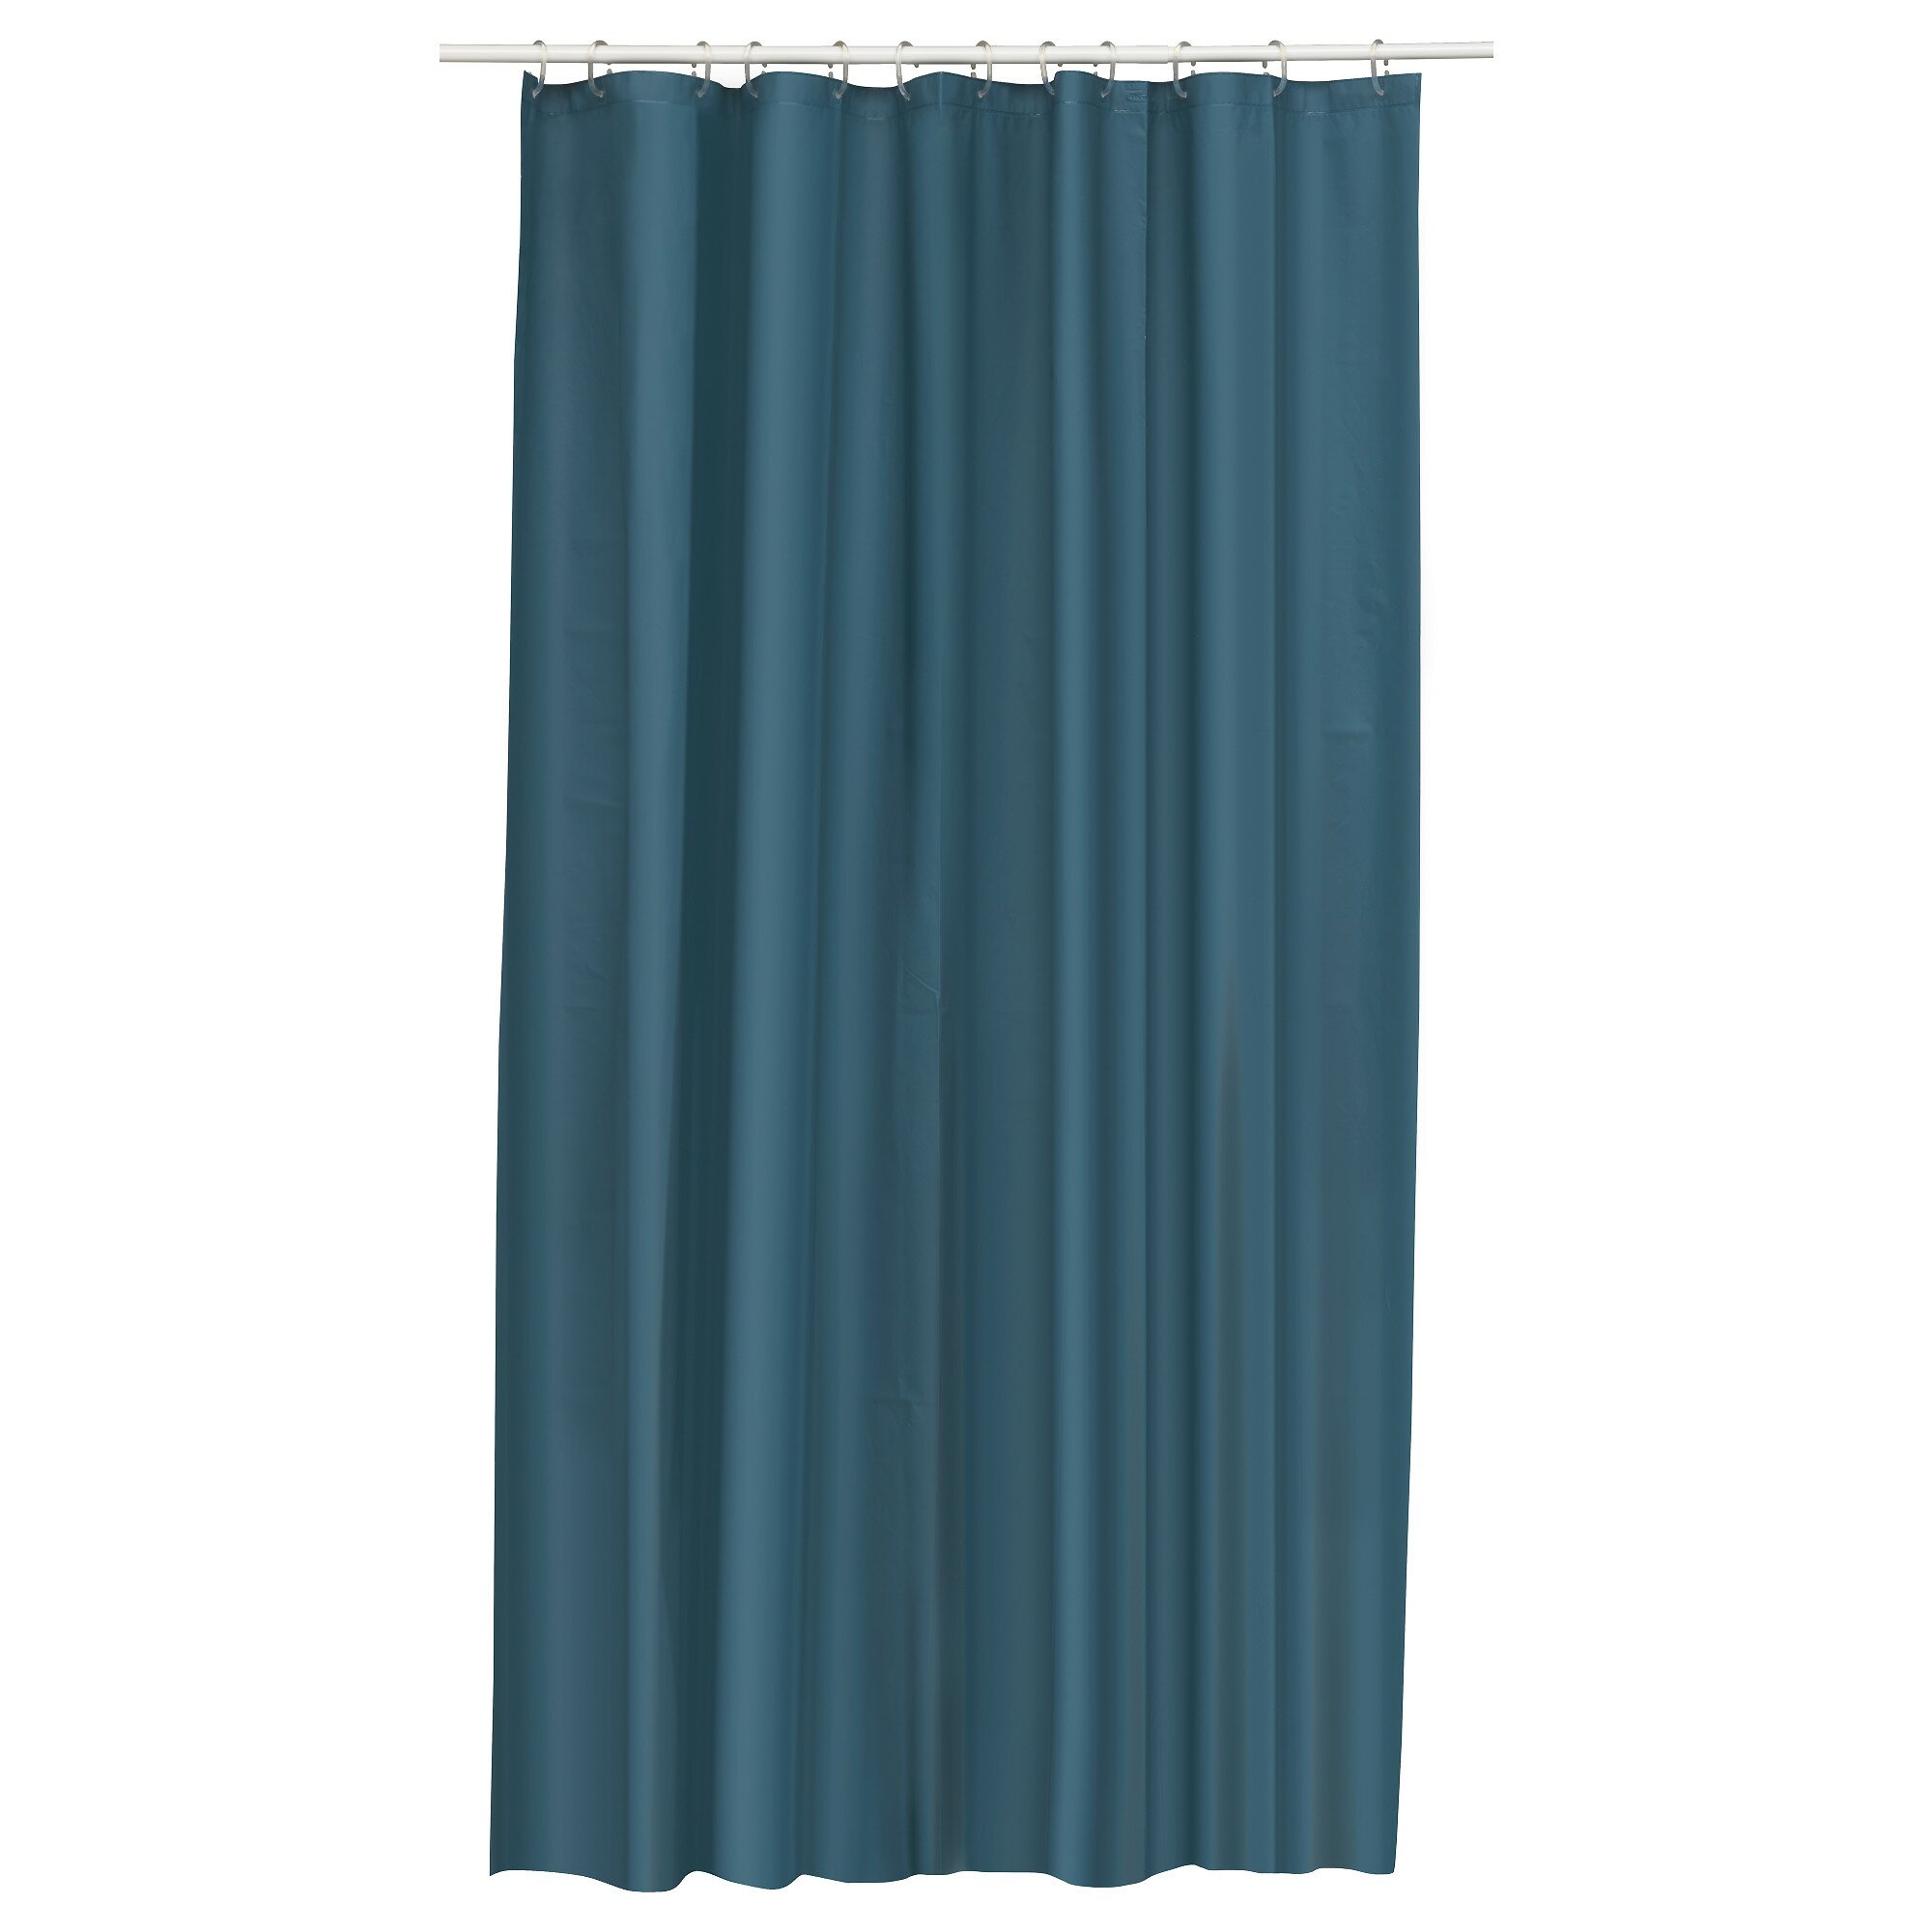 Ikea Shower Curtain for Best Your Bathroom Decoration: Shower Curtain Rod | Tahari Shower Curtain | Ikea Shower Curtain